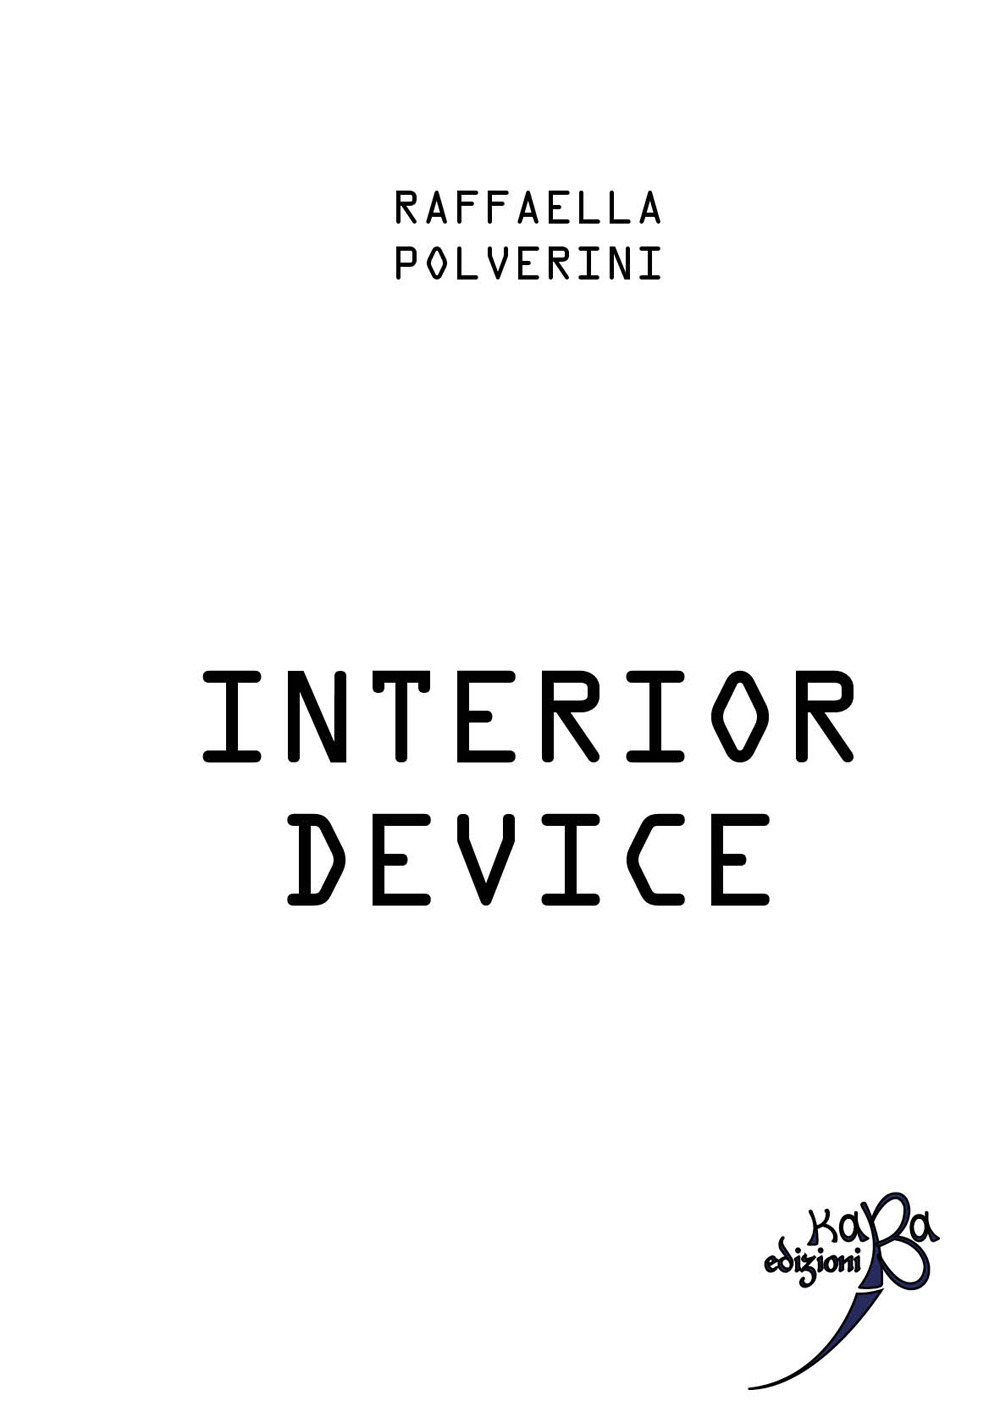 Interior device